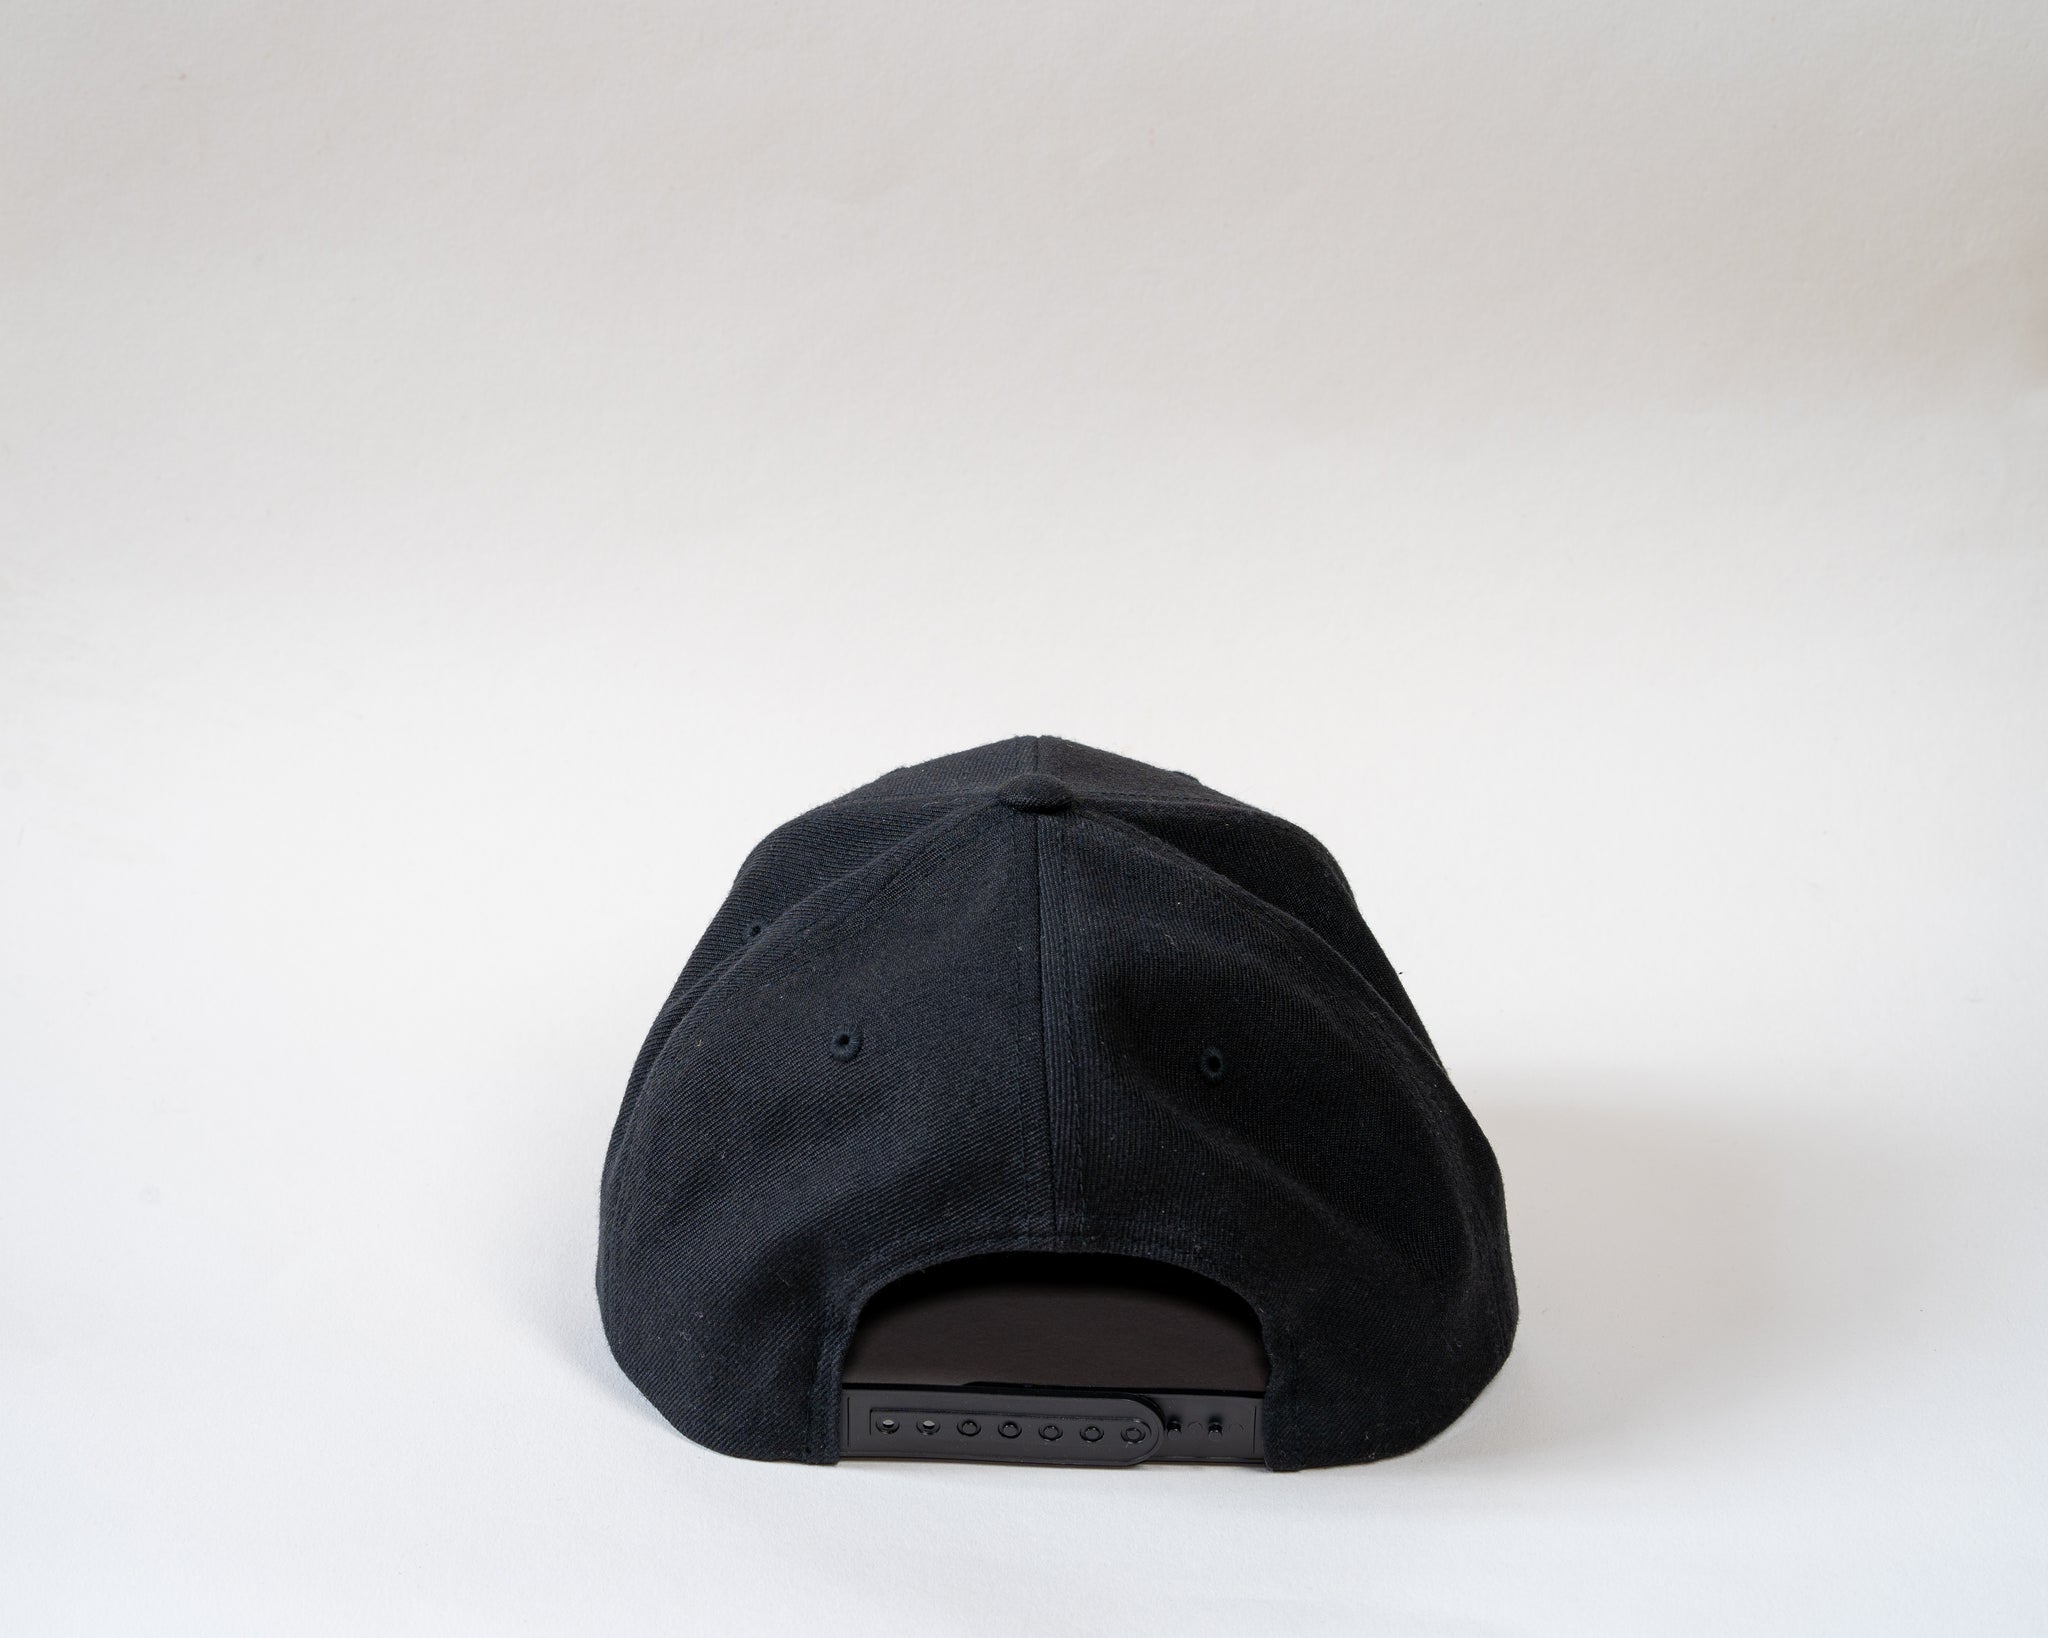 Jam Snapback cap showcasing rear clasp sitting on a white background